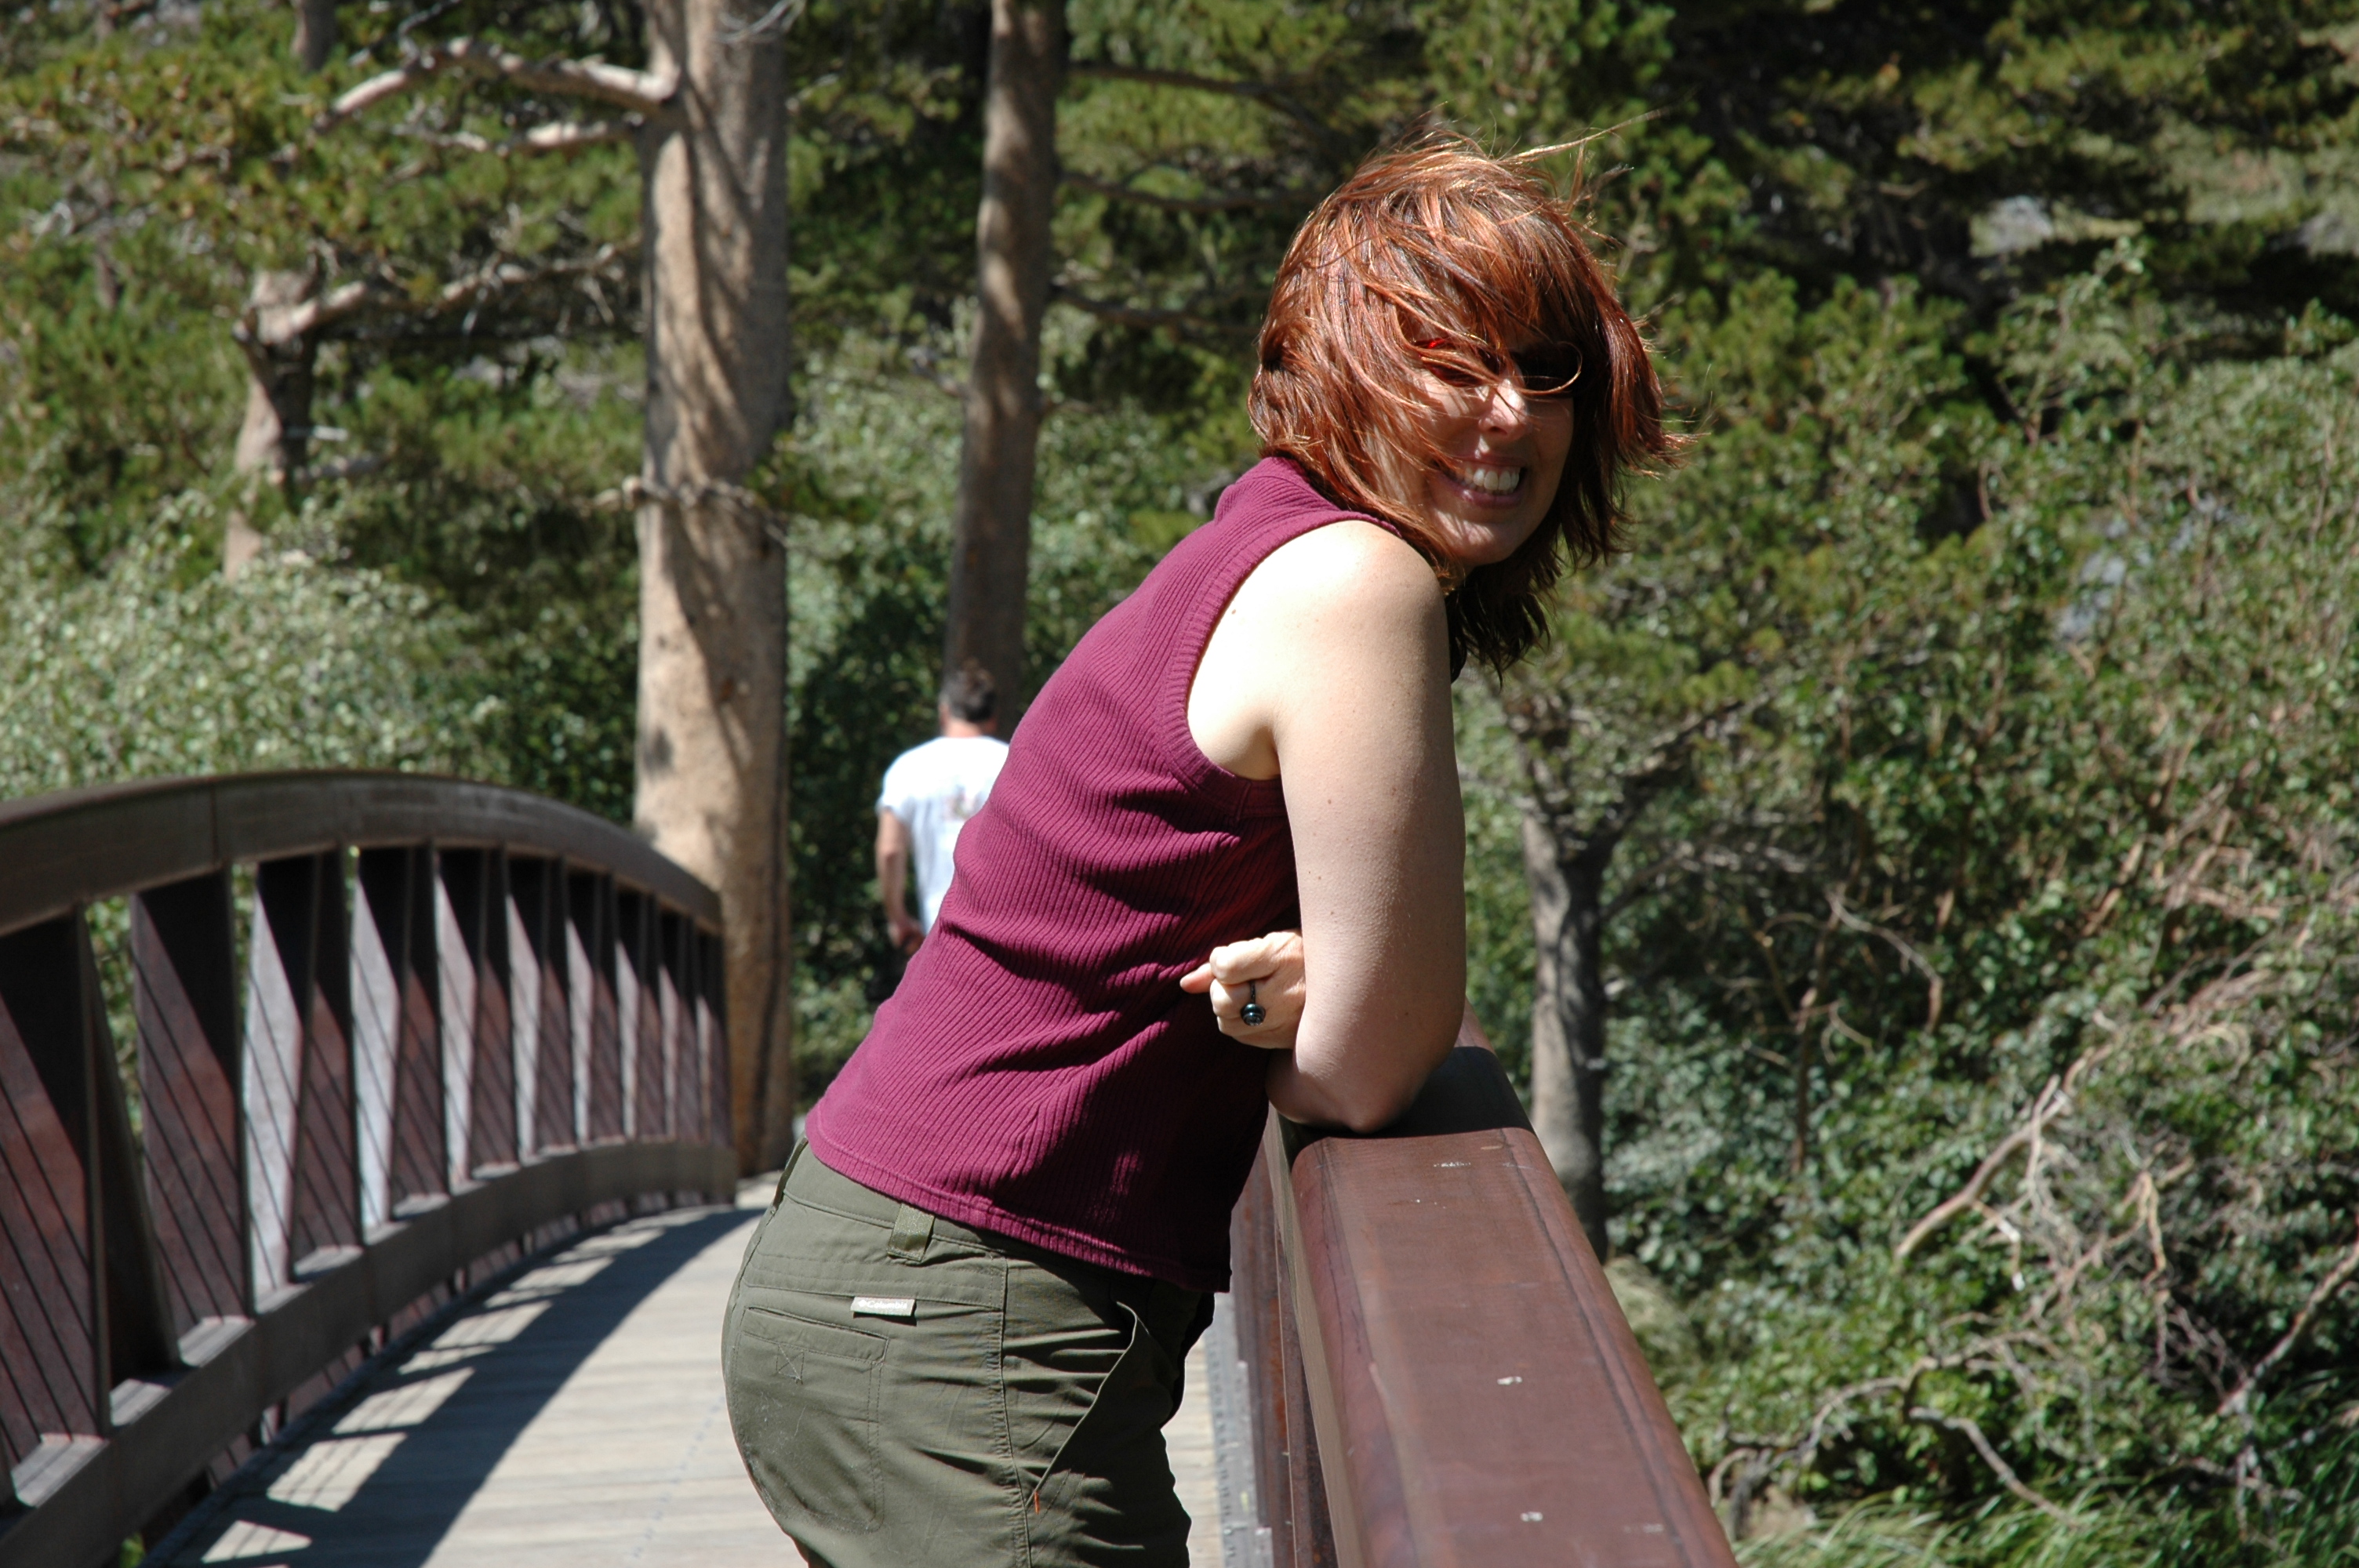 Leee Hockenberry leaning on a bridge railing